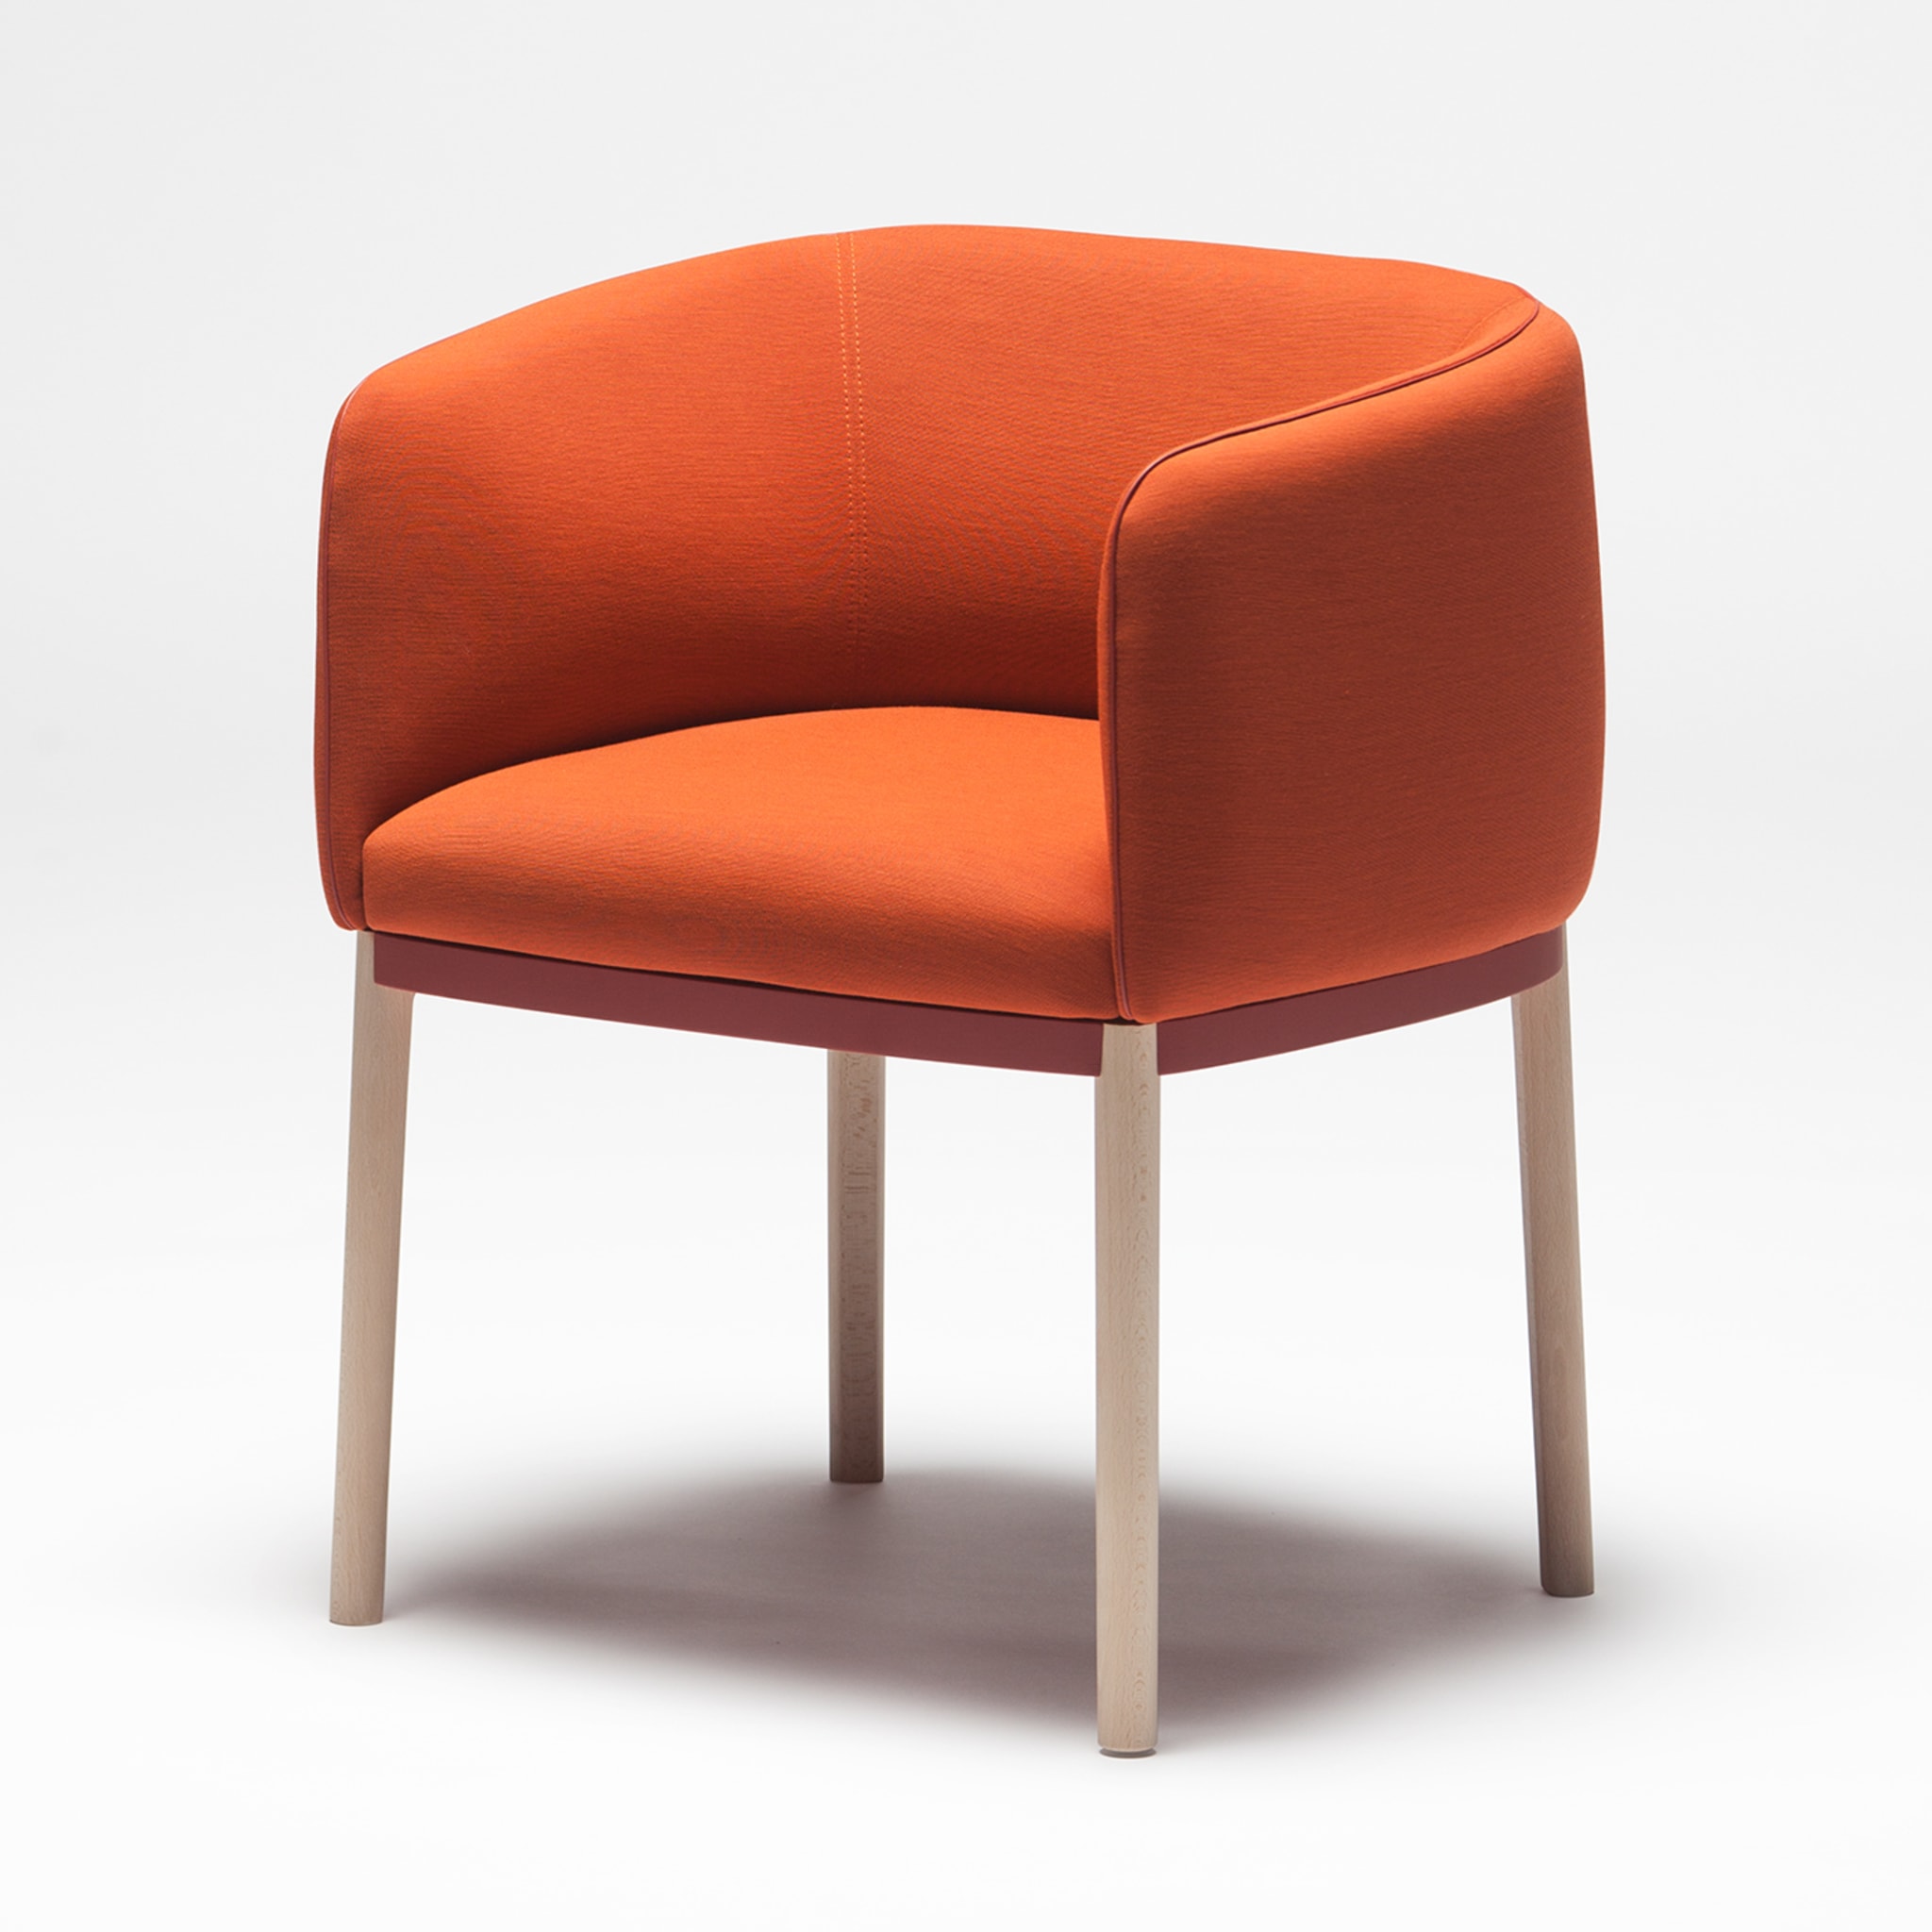 Cape 809 Orange Chair by Debiasi Sandri - Vue alternative 2